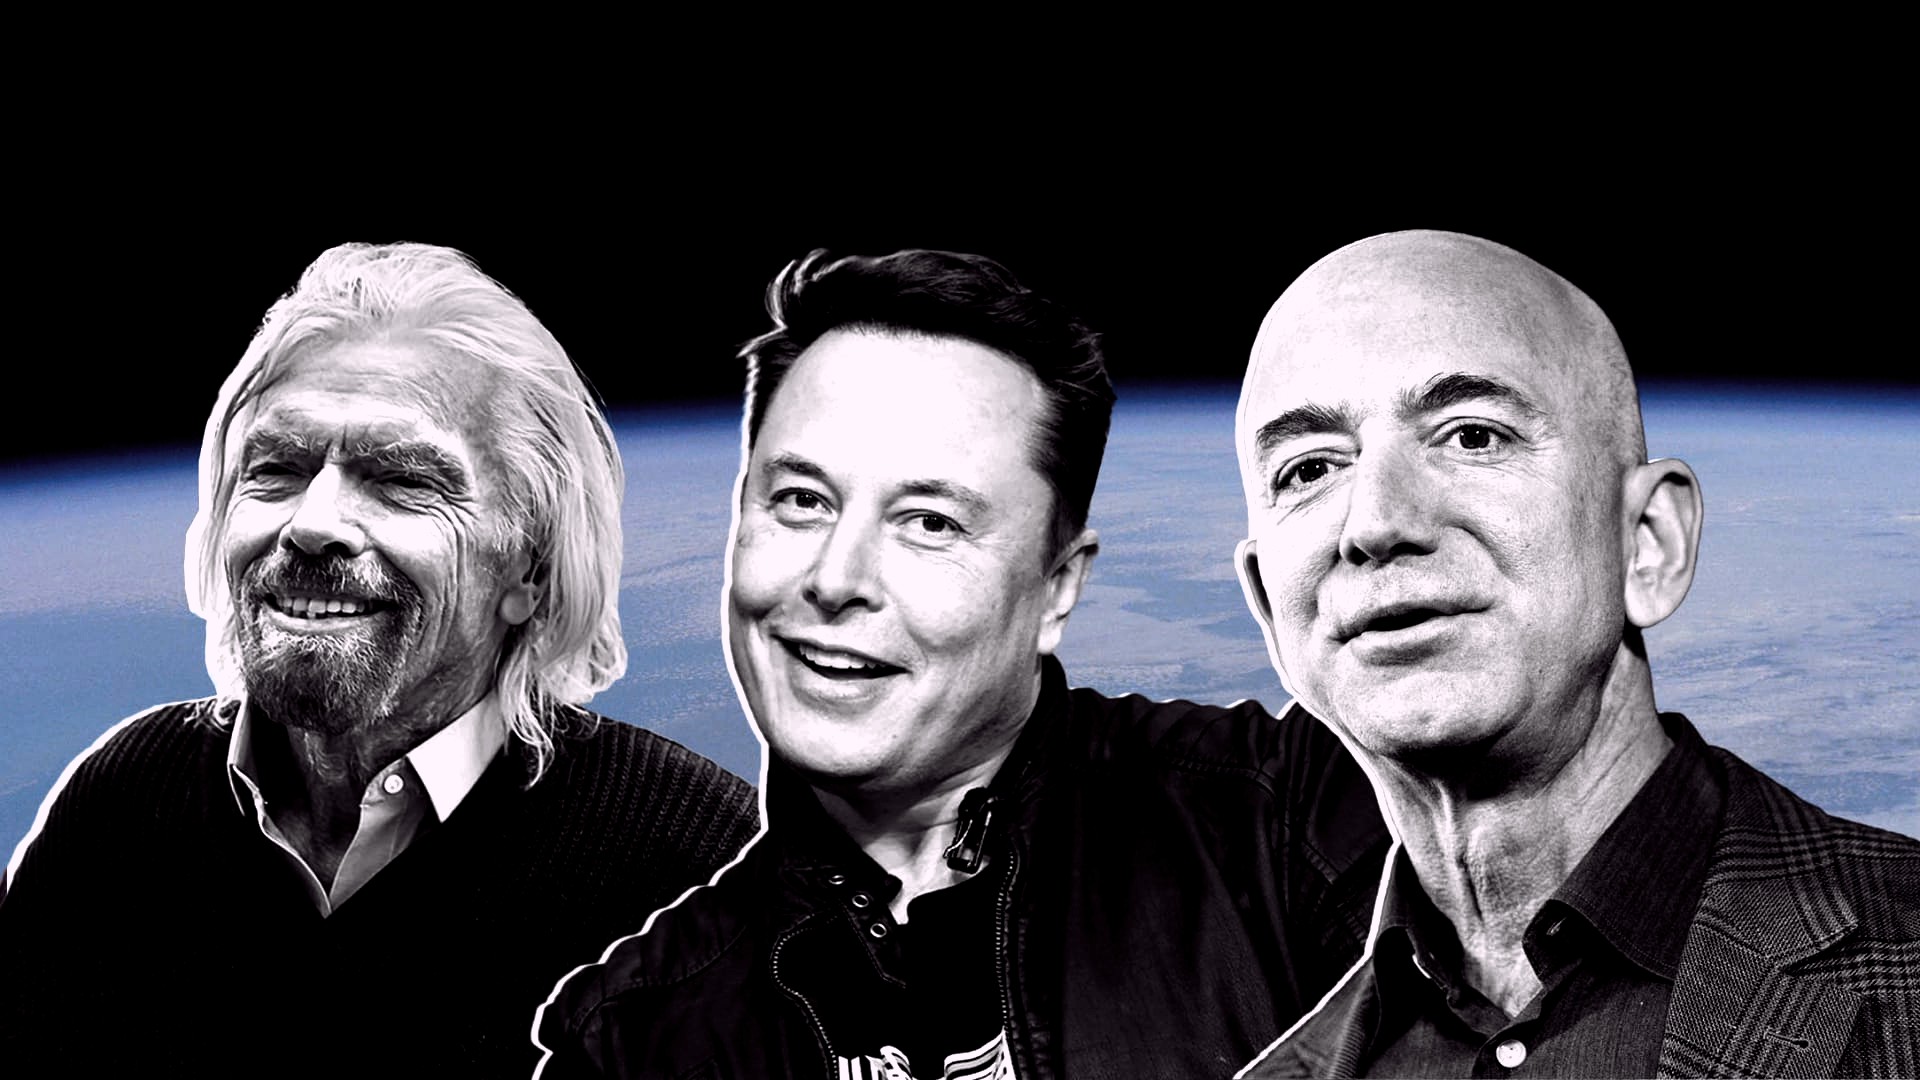 Virgin Orbit – Richard Branson’s Satellite launch to Counter Bezos and Musk